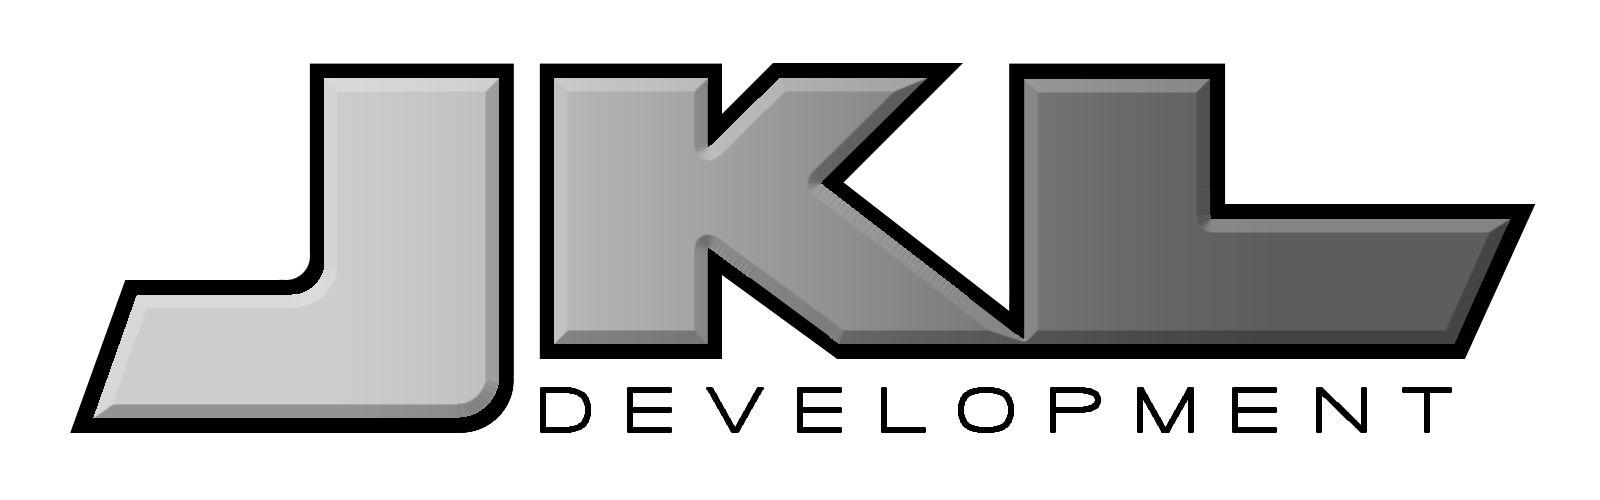 Jkl Logo - JKL Development Inc. - Las Vegas, NV - Home